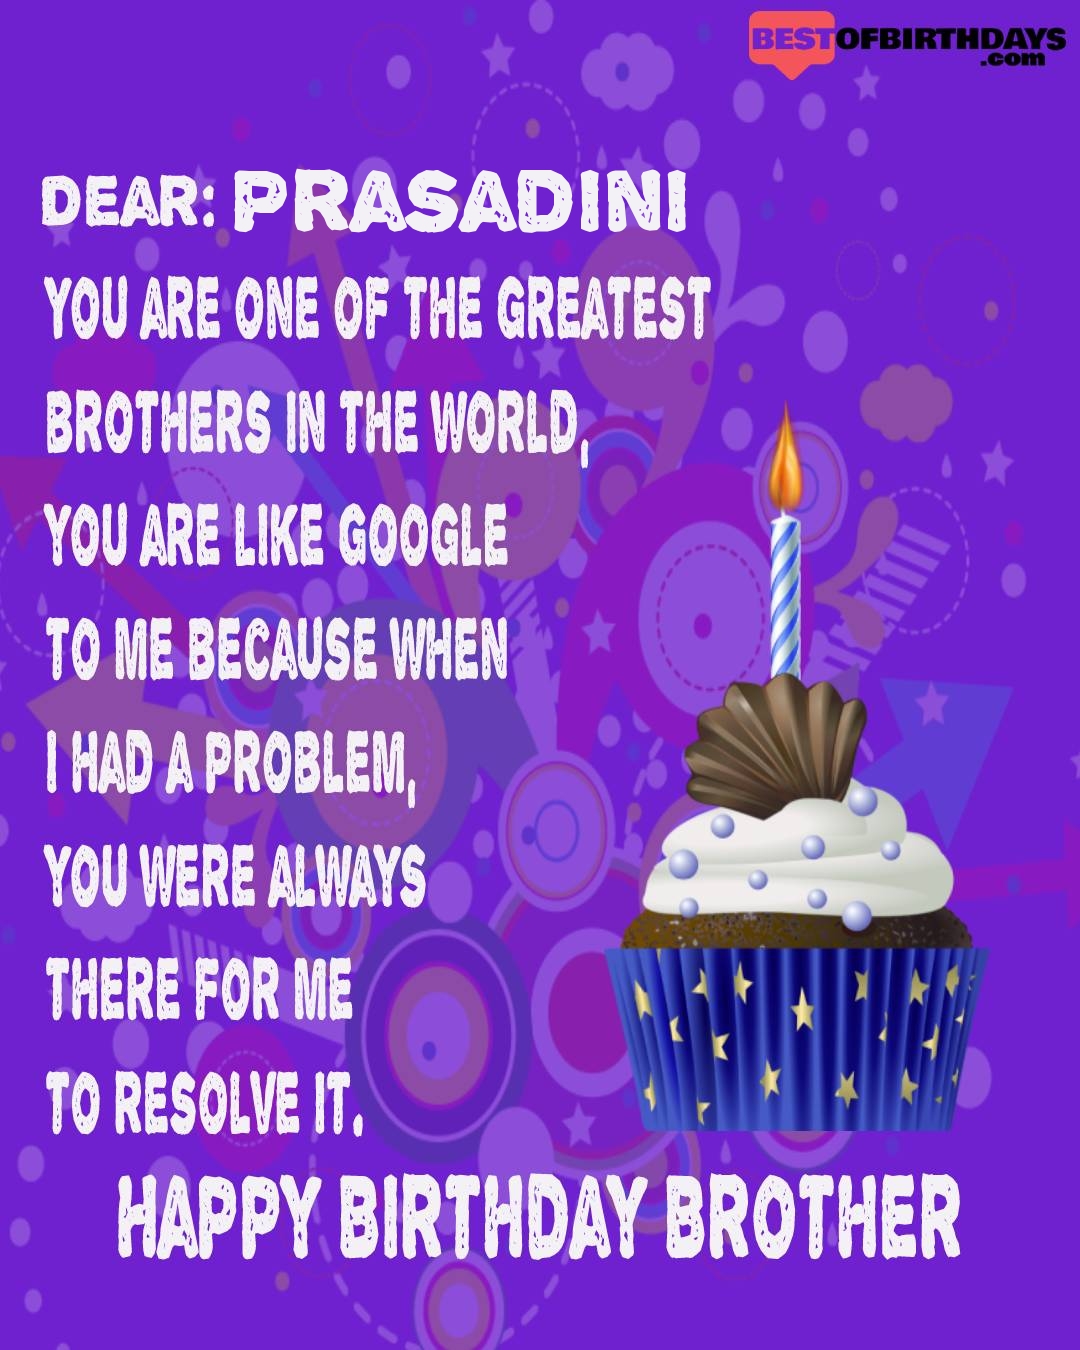 Happy birthday prasadini bhai brother bro